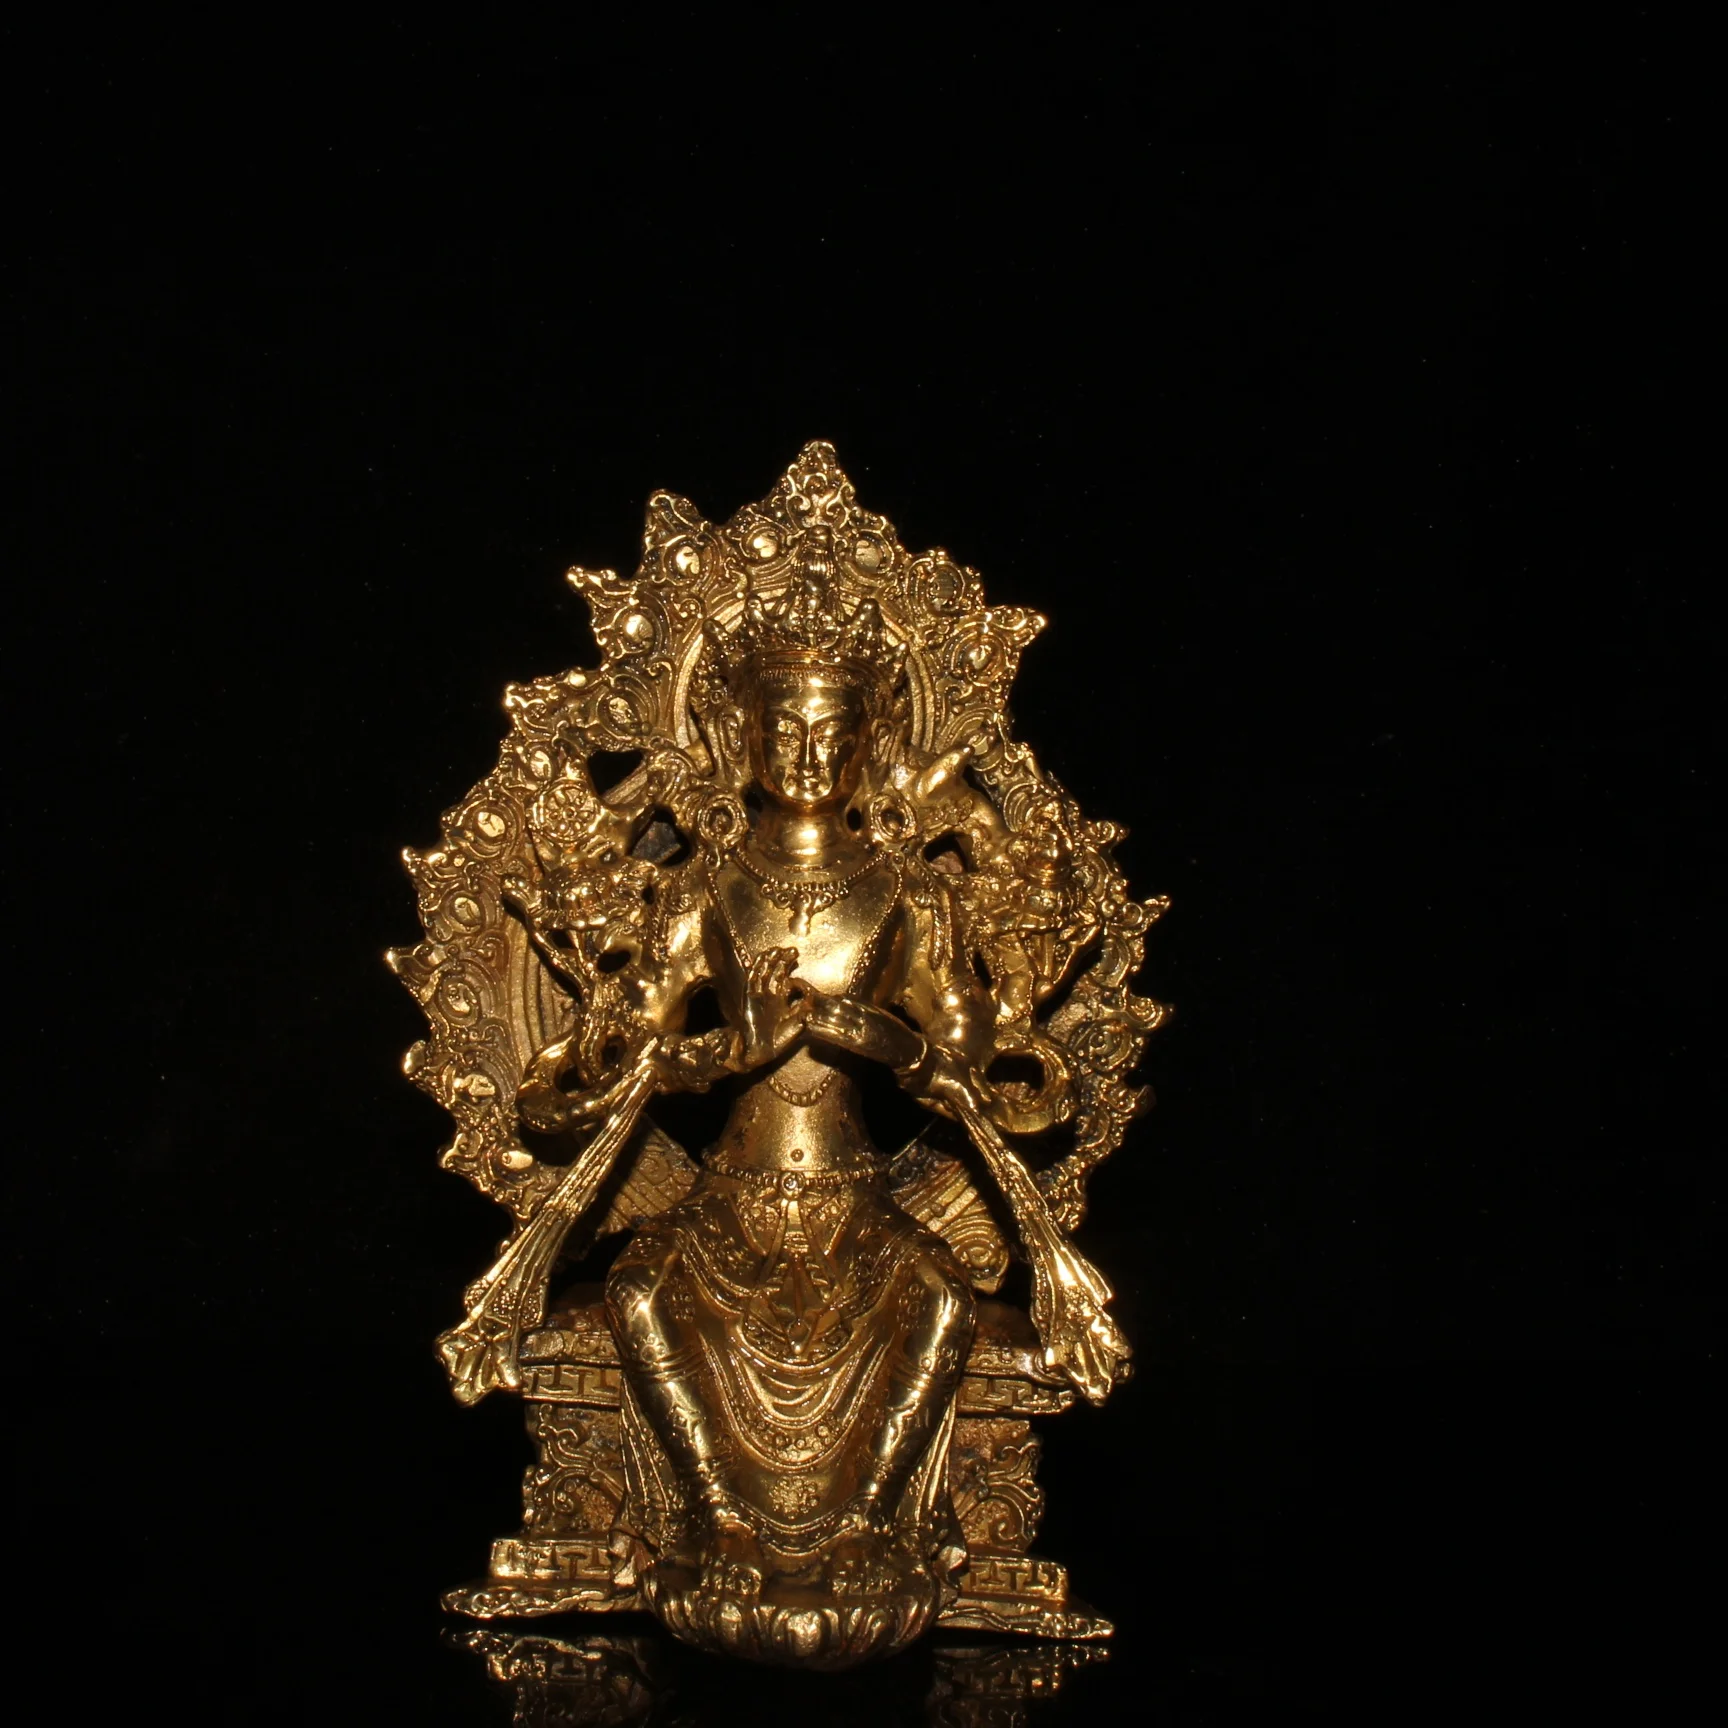 Exquisite antique pure copper gold-plated Guanyin Buddha statue ornament